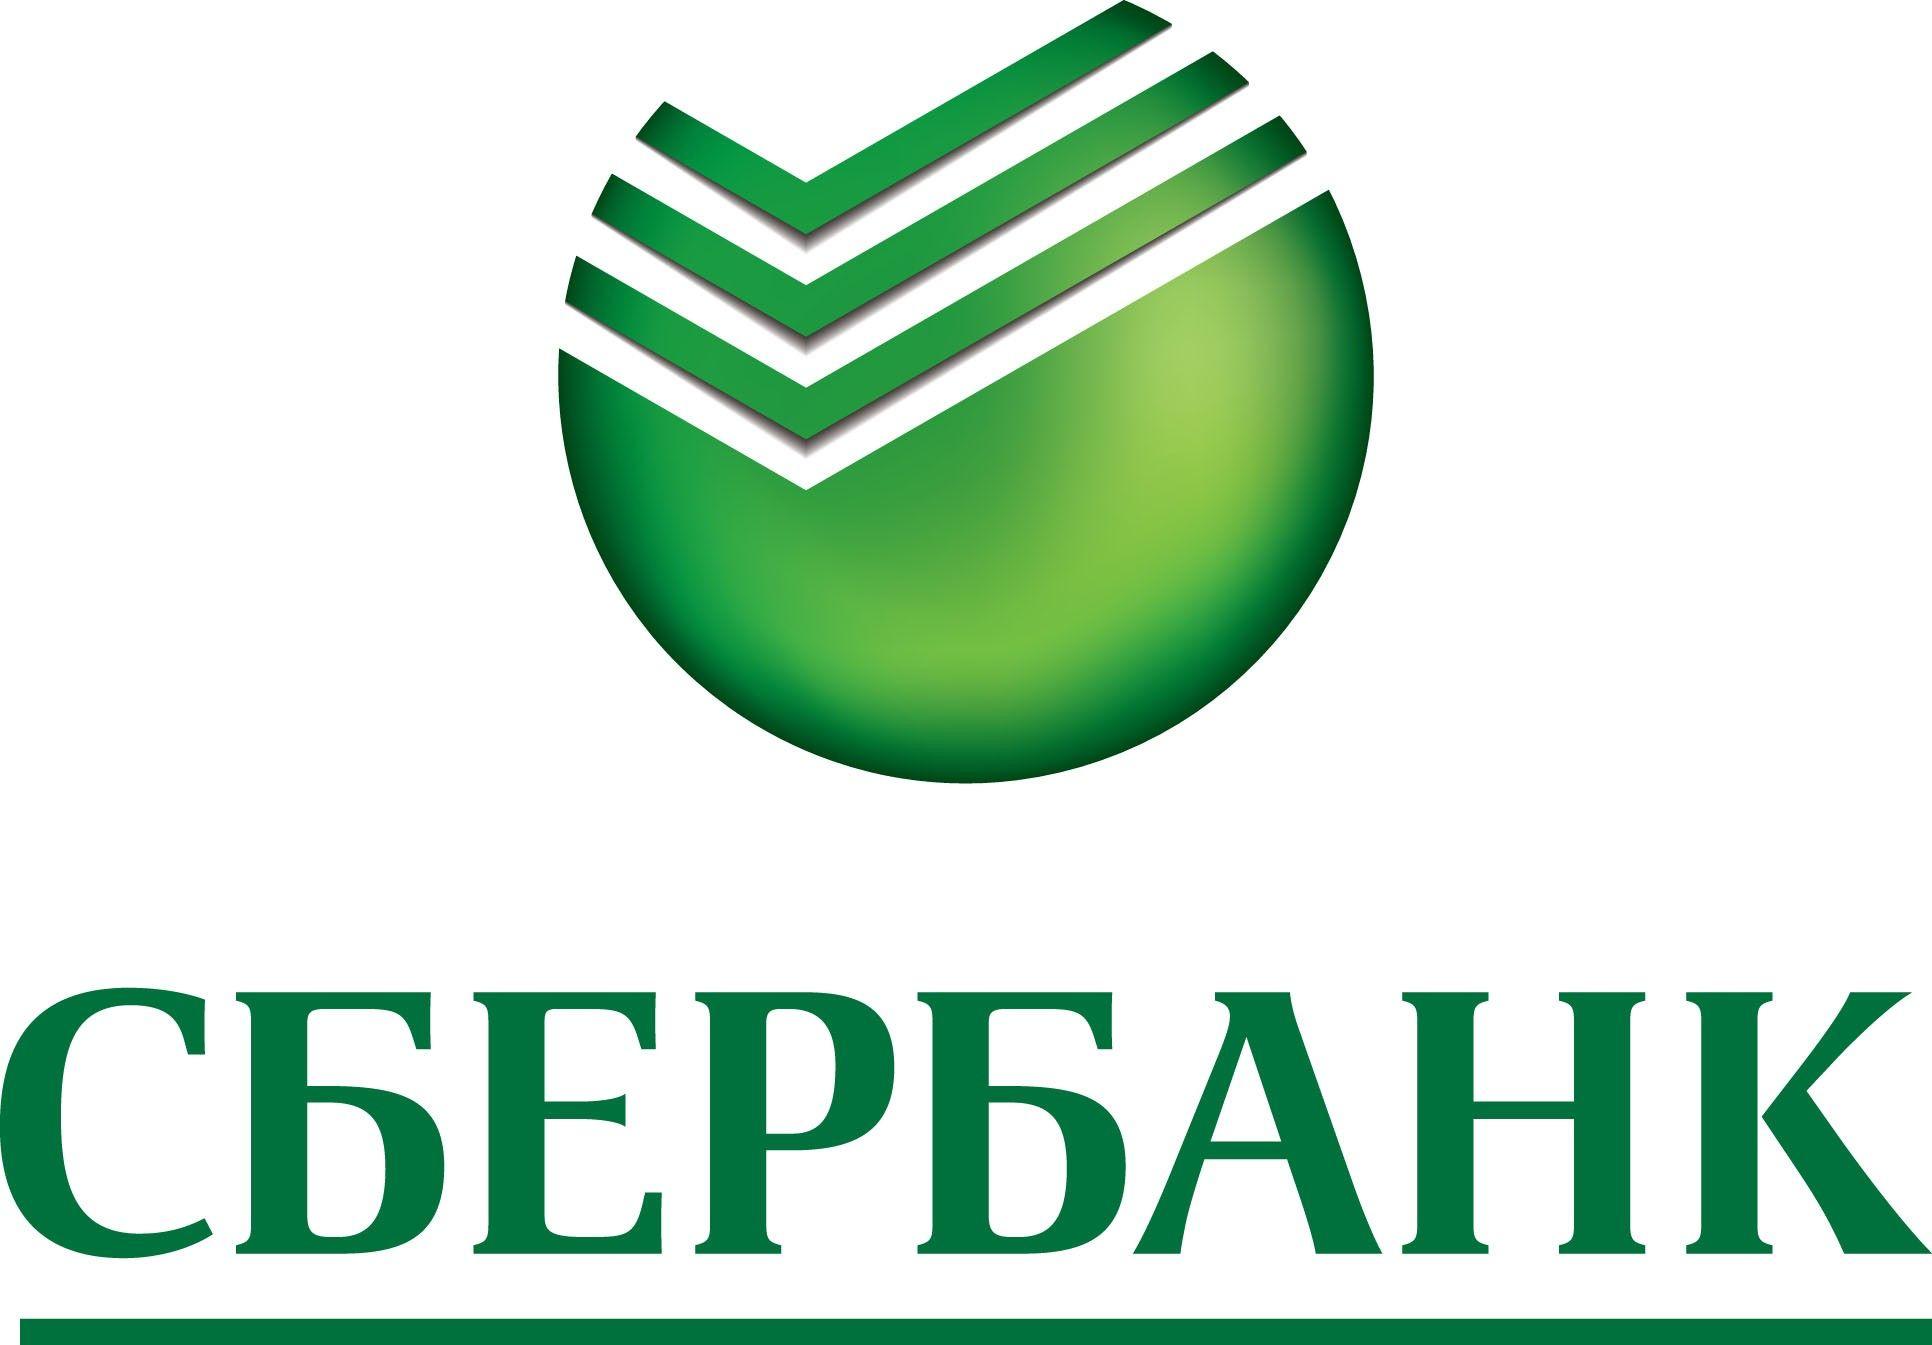 Sberbank Logo - Sberbank Logo 2010 2011 In The Formats Eps And Ai